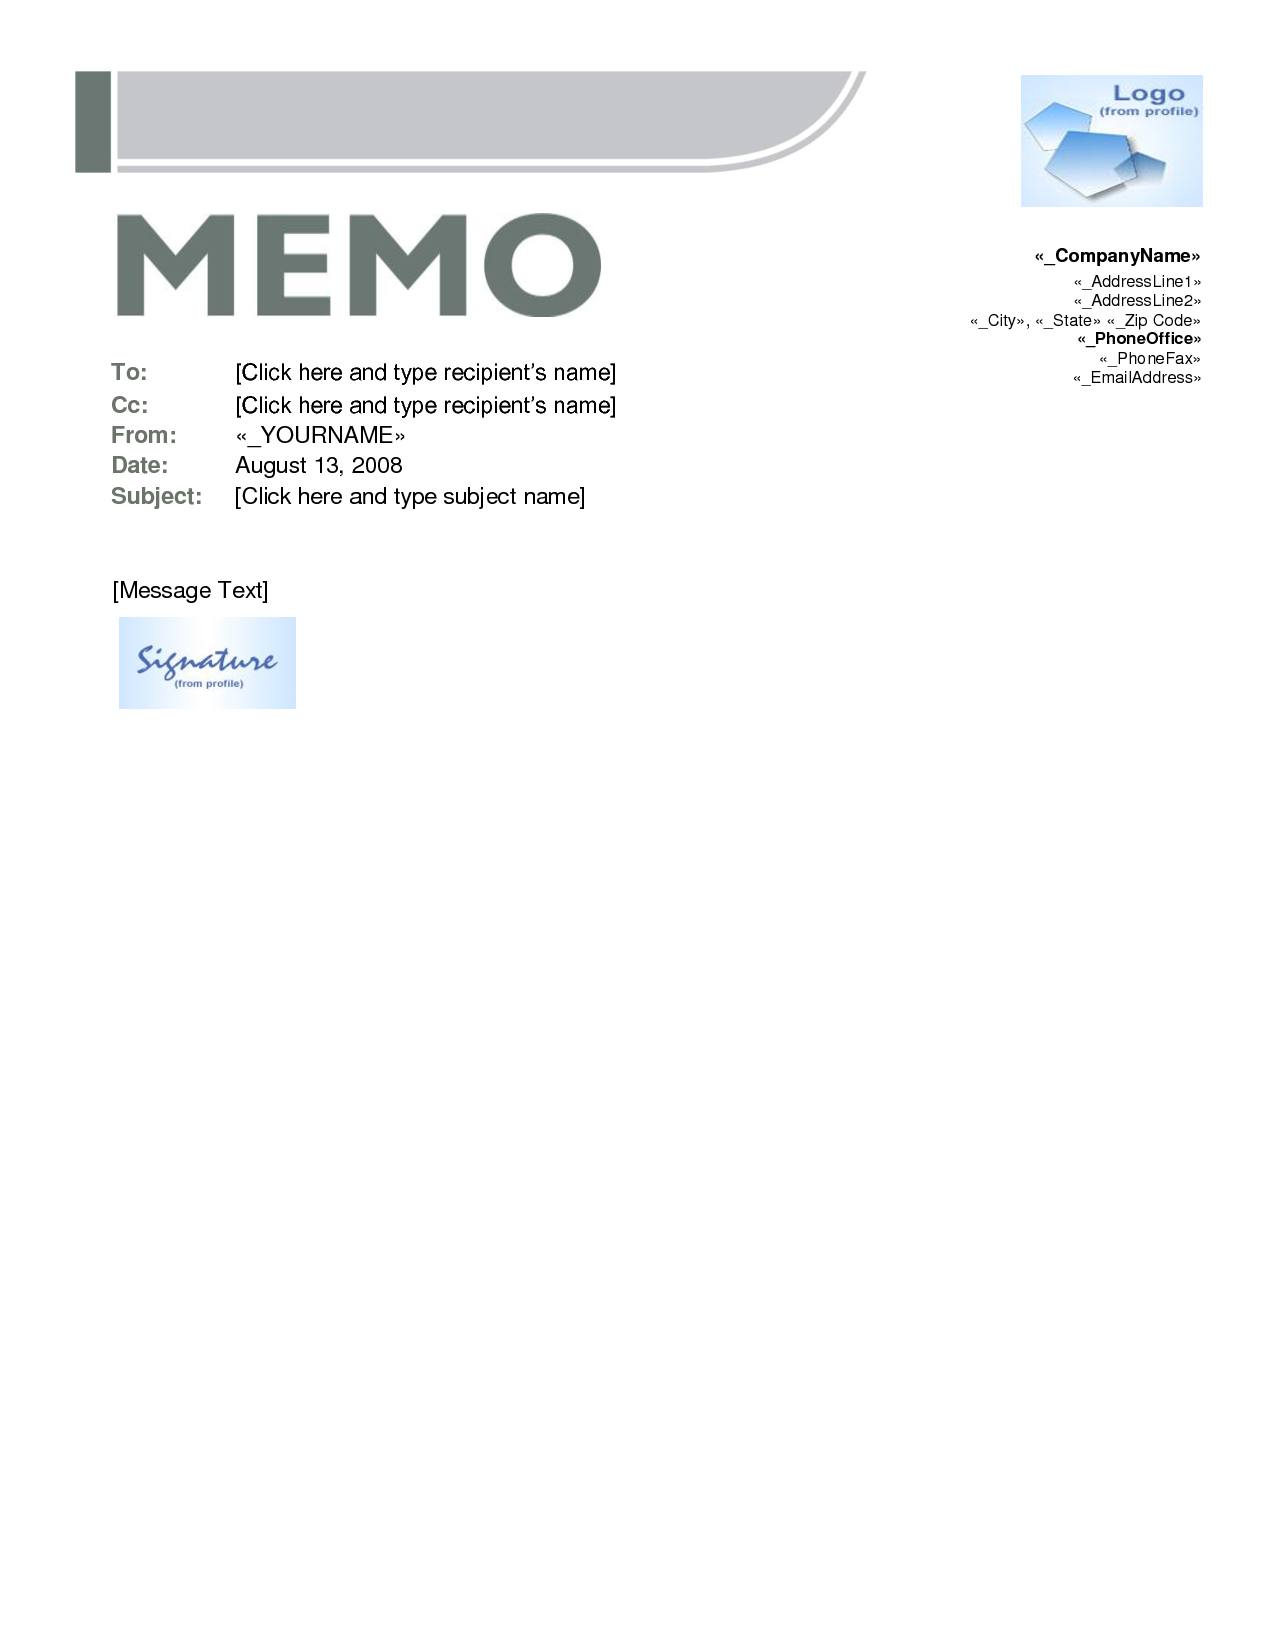 Memo Template Word | E Commercewordpress For Memo Template Word 2010